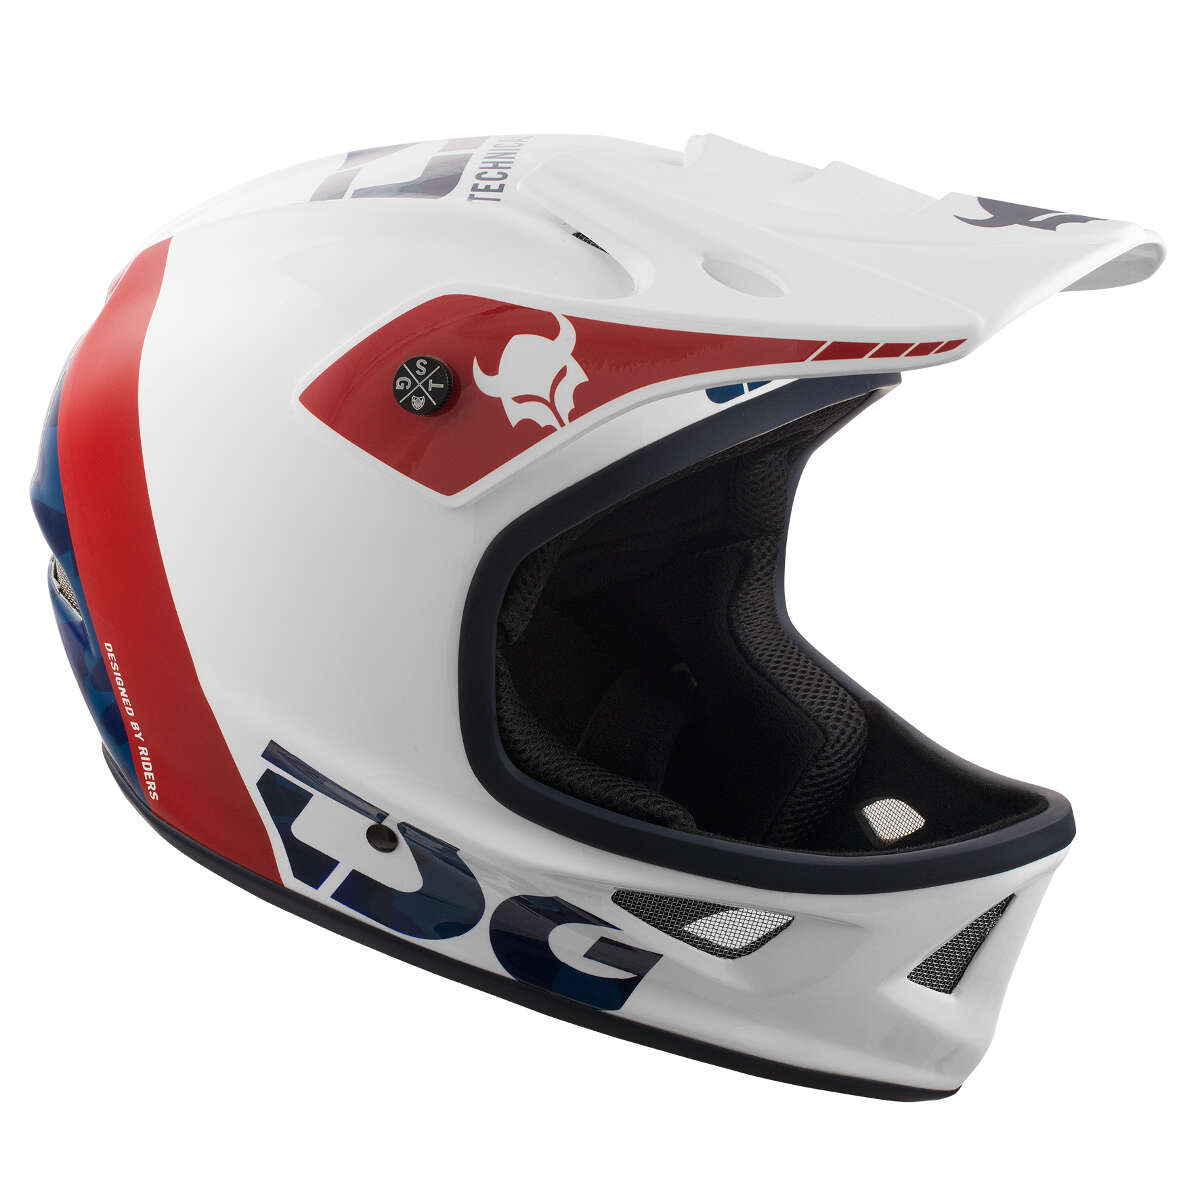 TSG Downhill-MTB Helmet Squad Graphic Design - Trap White